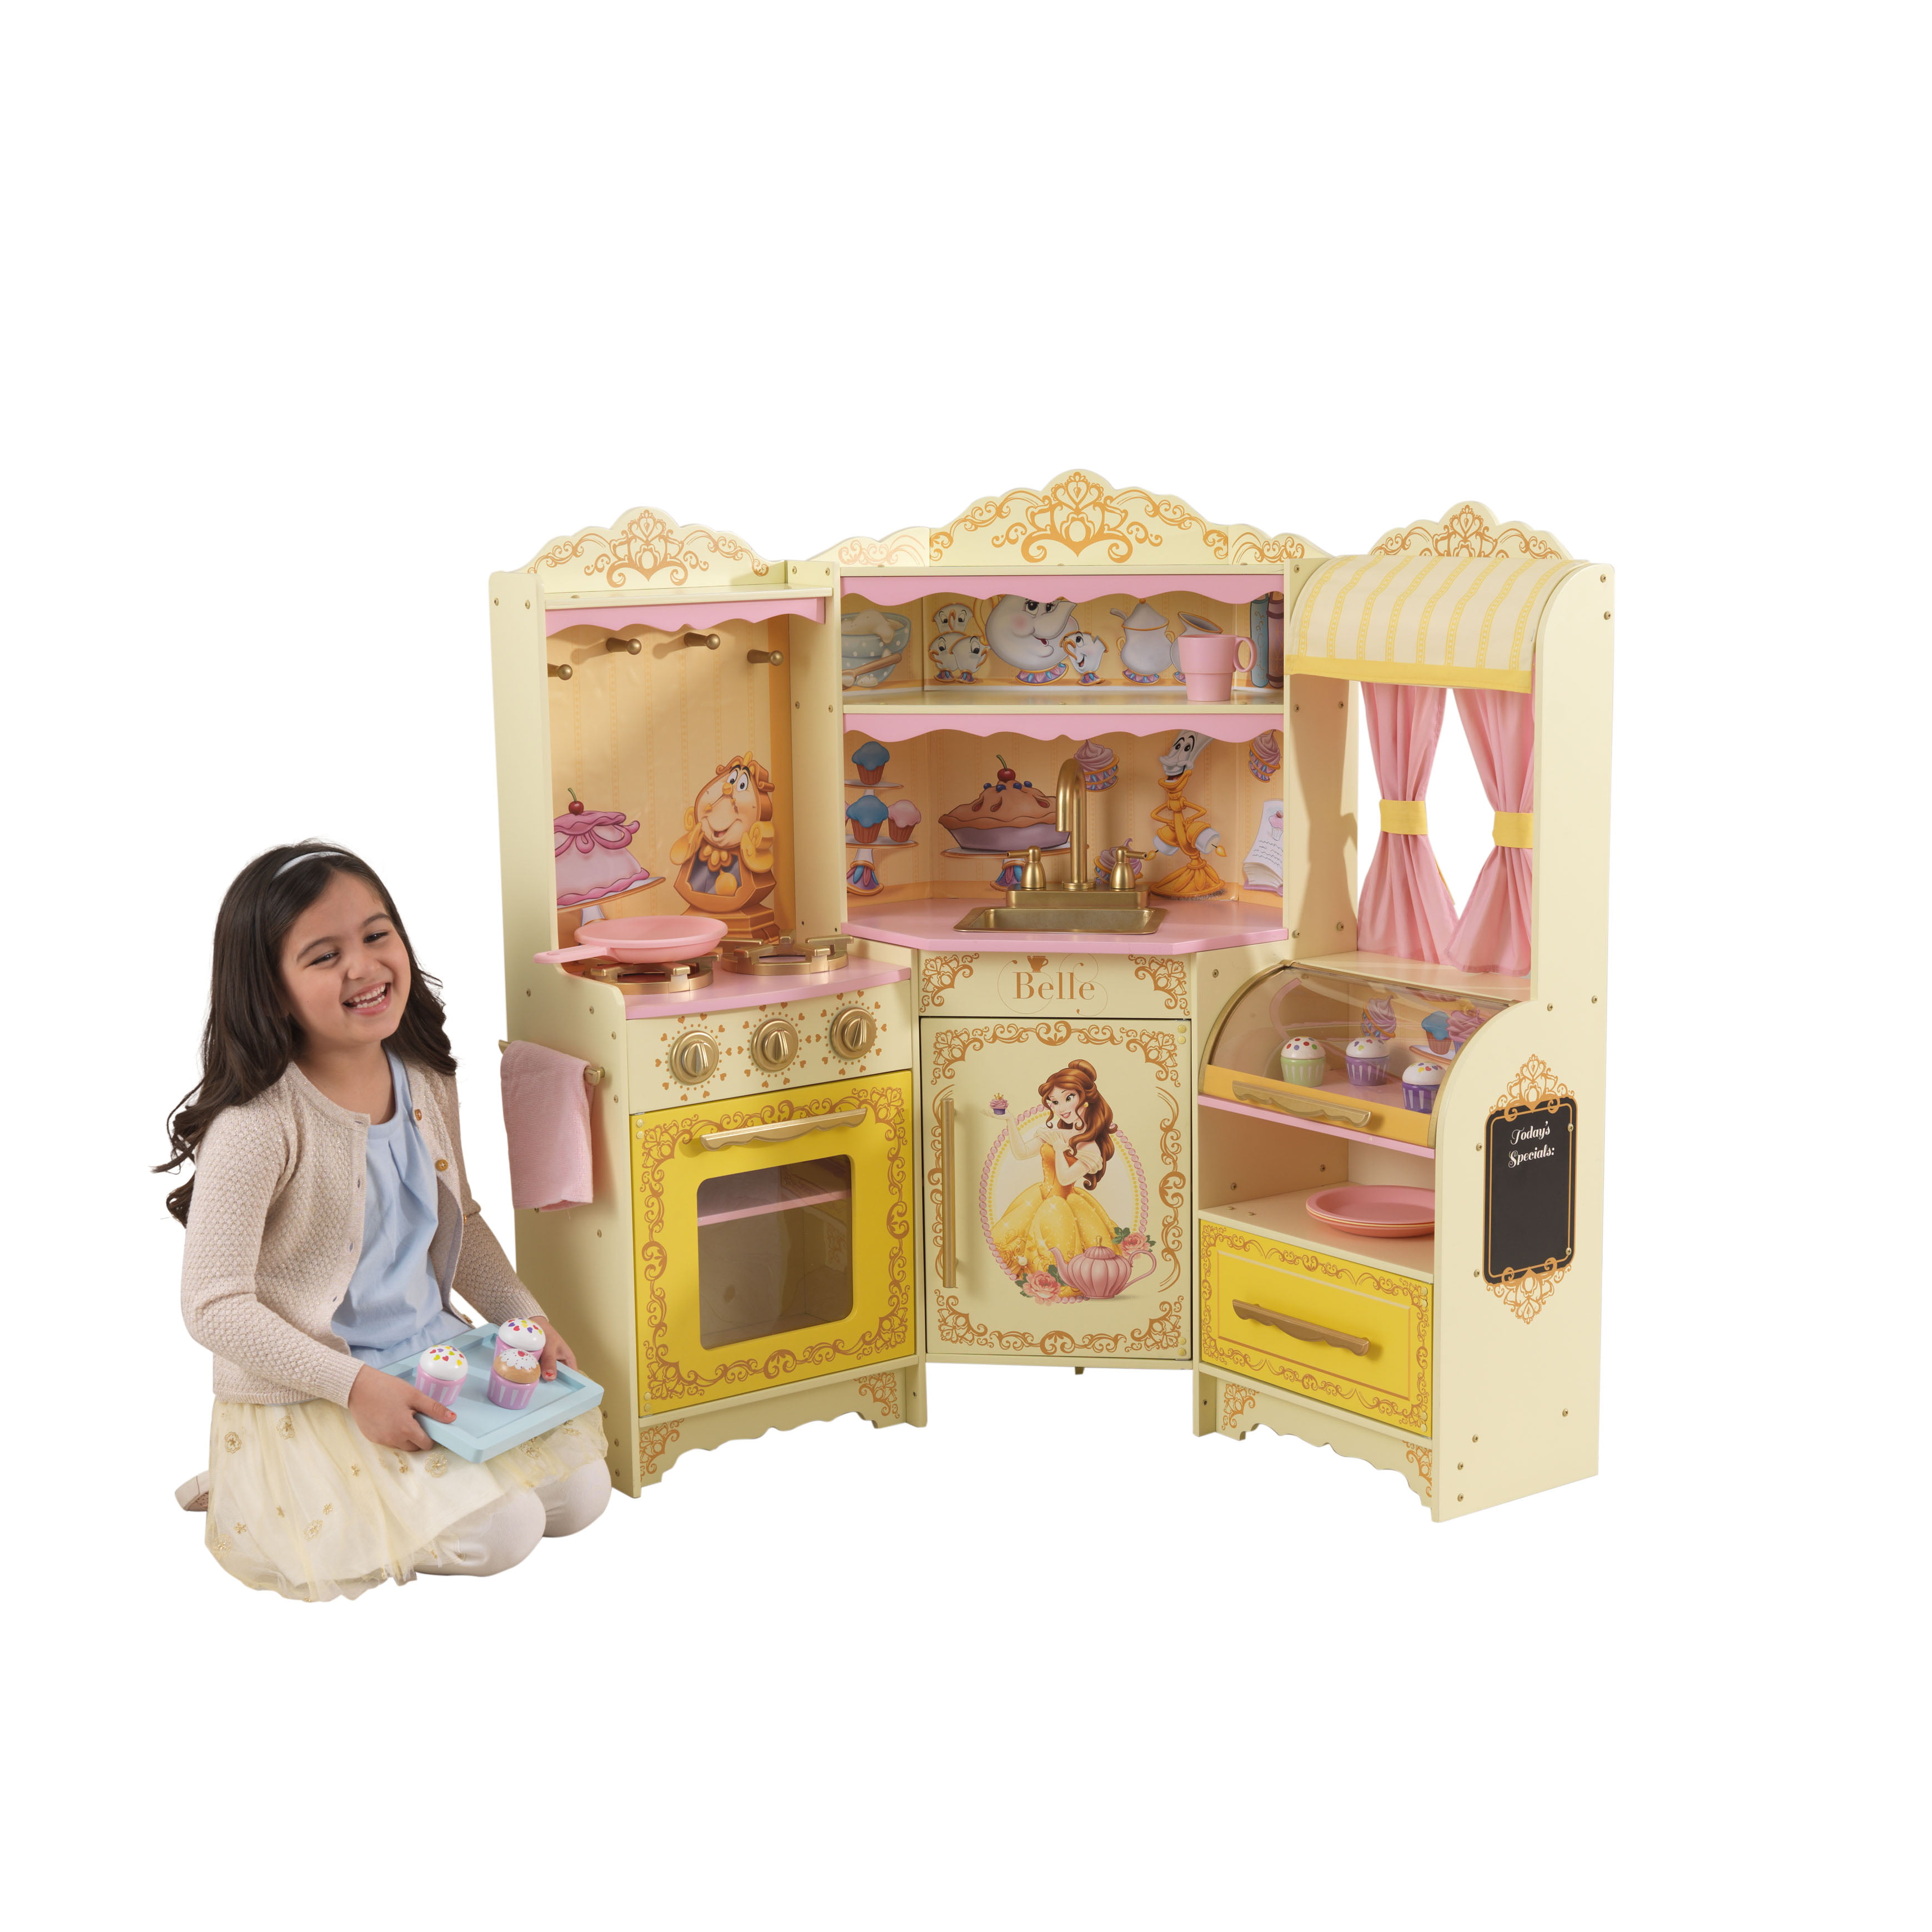  Disney  Princess  Belle Pastry Kitchen  By KidKraft Walmart  com